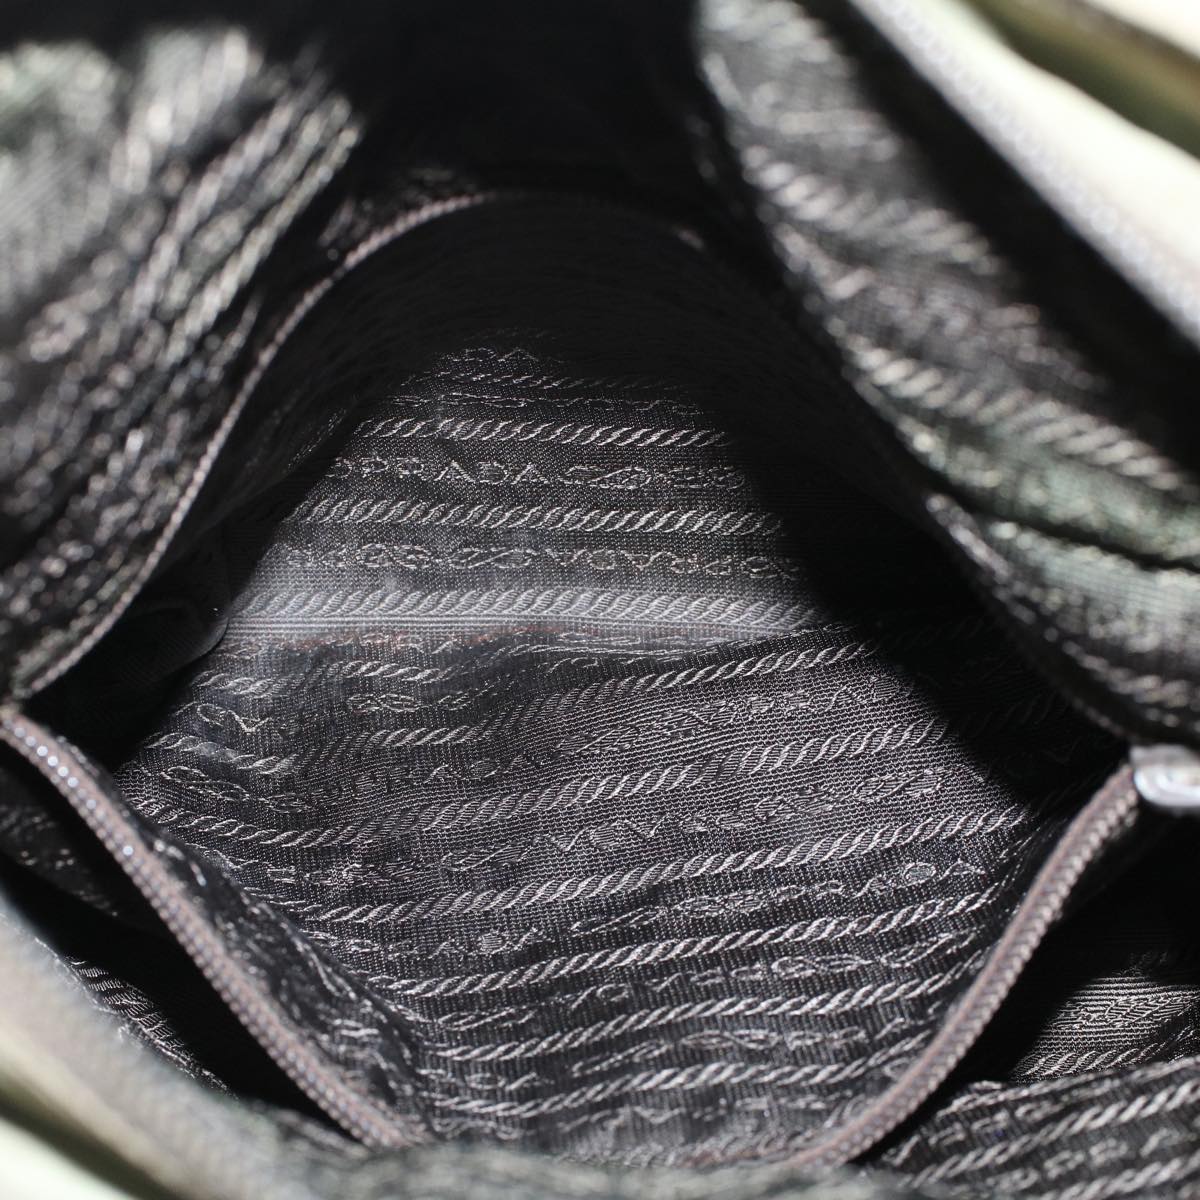 PRADA Shoulder Bag Nylon Khaki Auth cl556